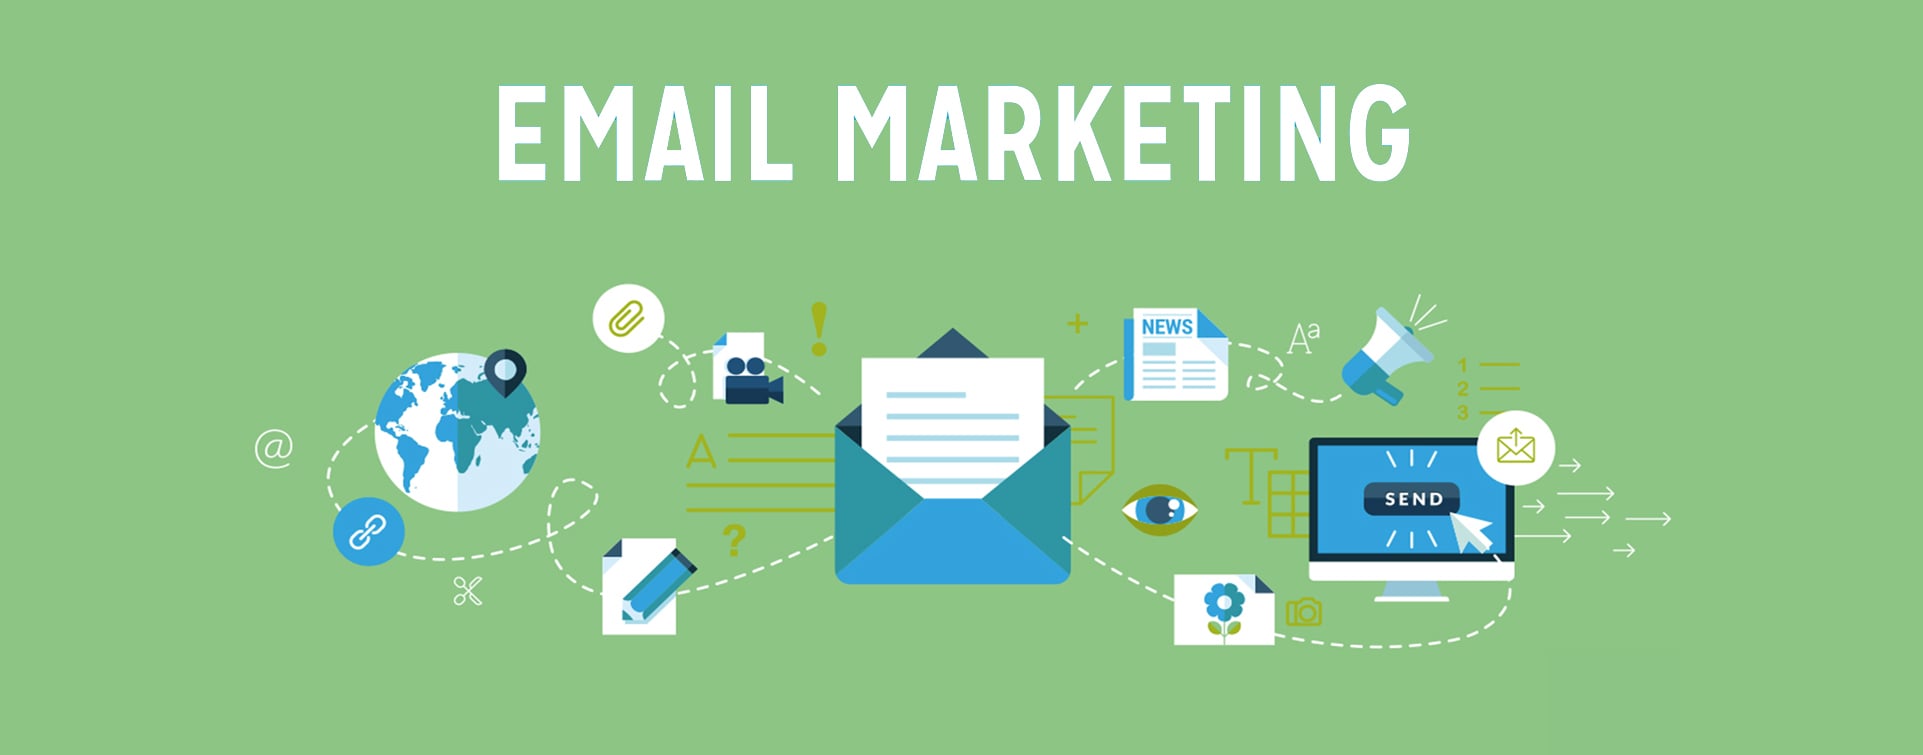 Email Marketing Company In Ahmedabad, India, Email Marketing India, Email Market